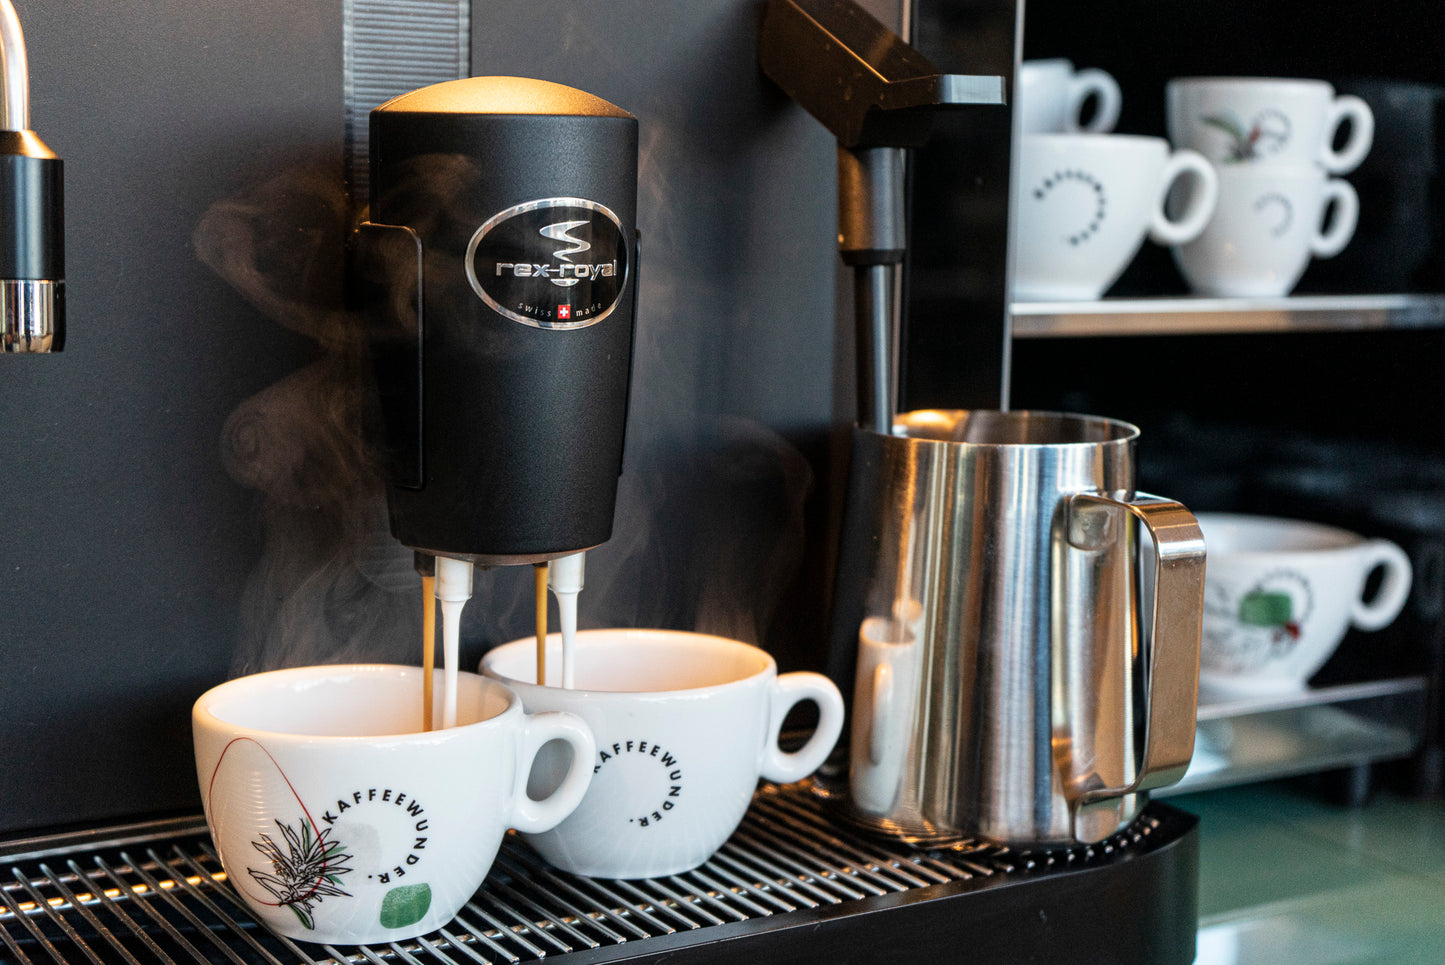 Kaffeewunder® espresso cup (8cl)